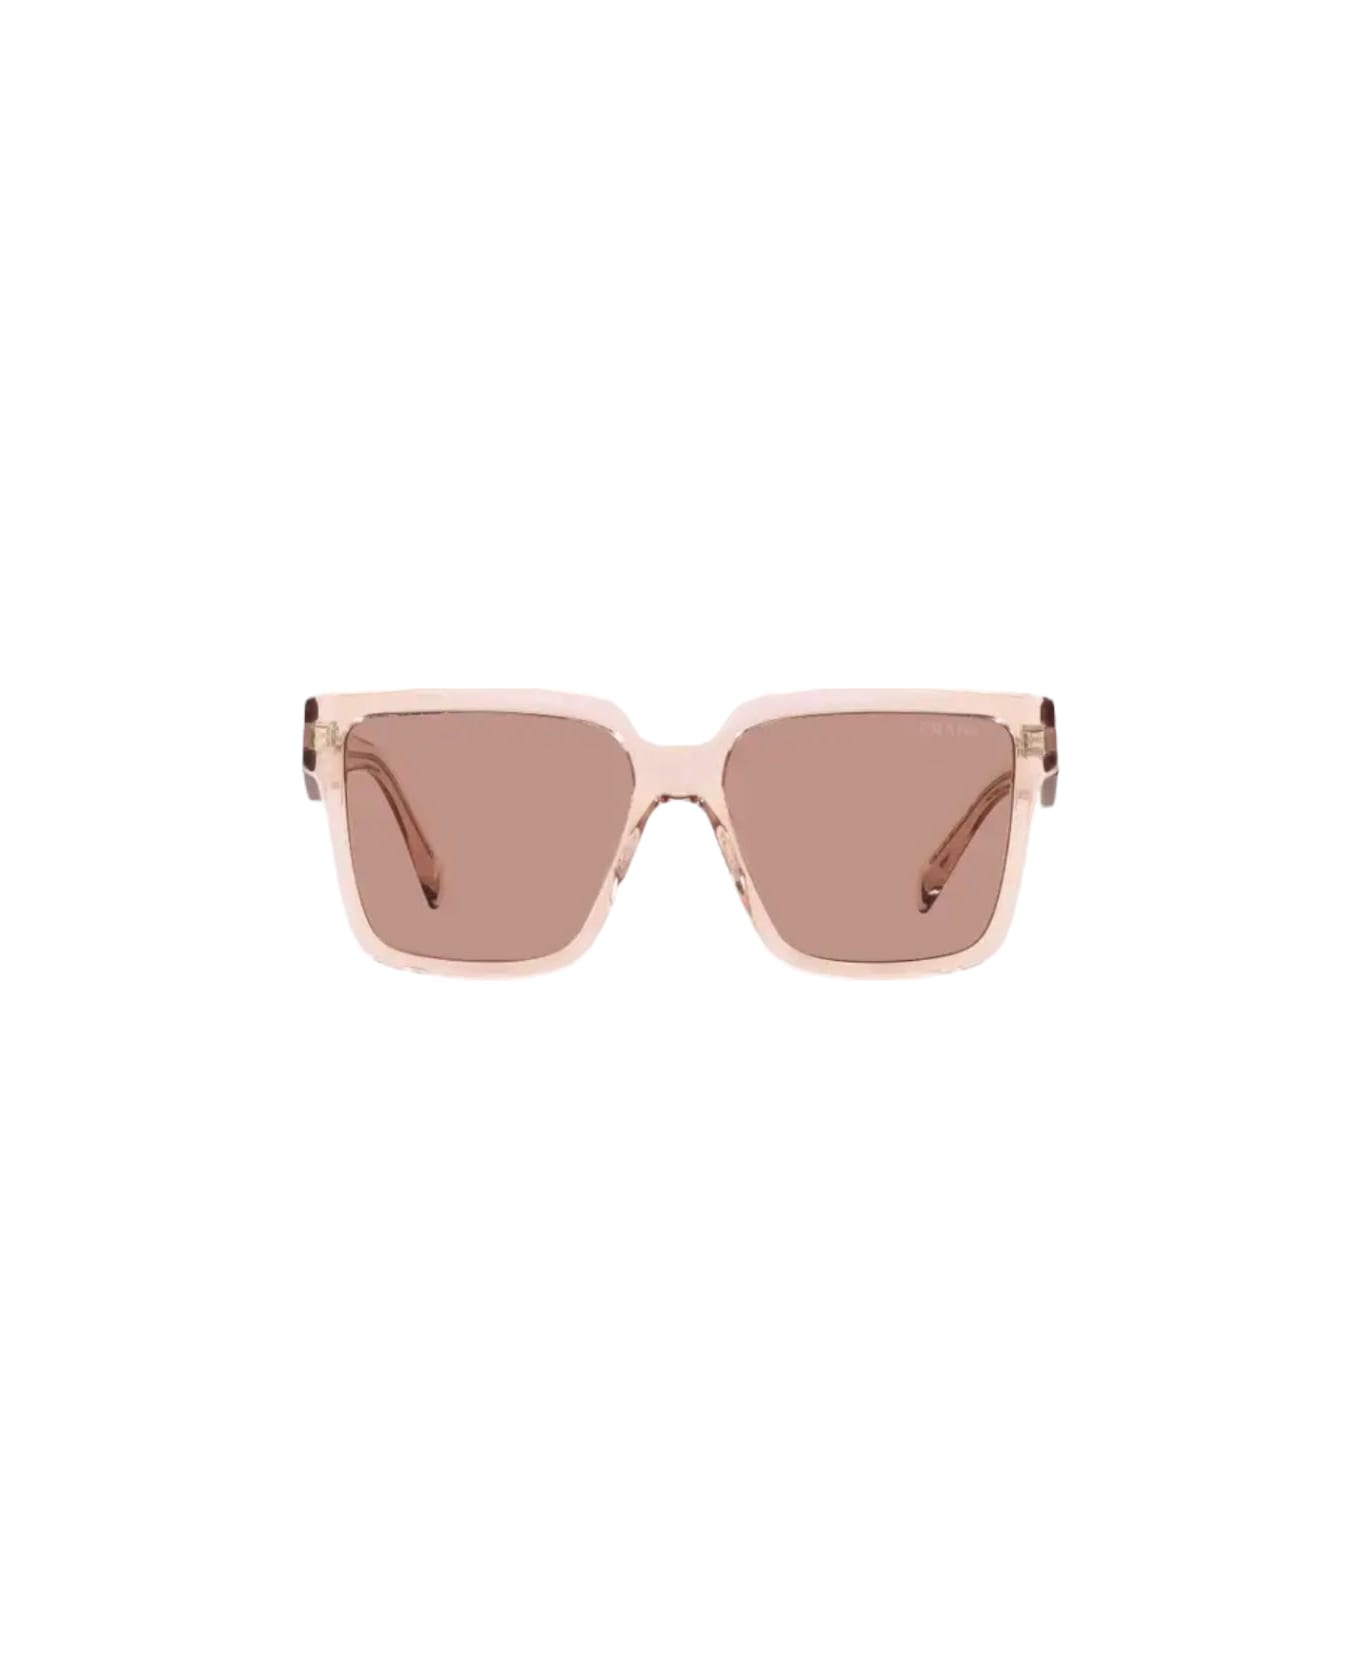 Prada Eyewear Spr 24zs Sunglasses サングラス